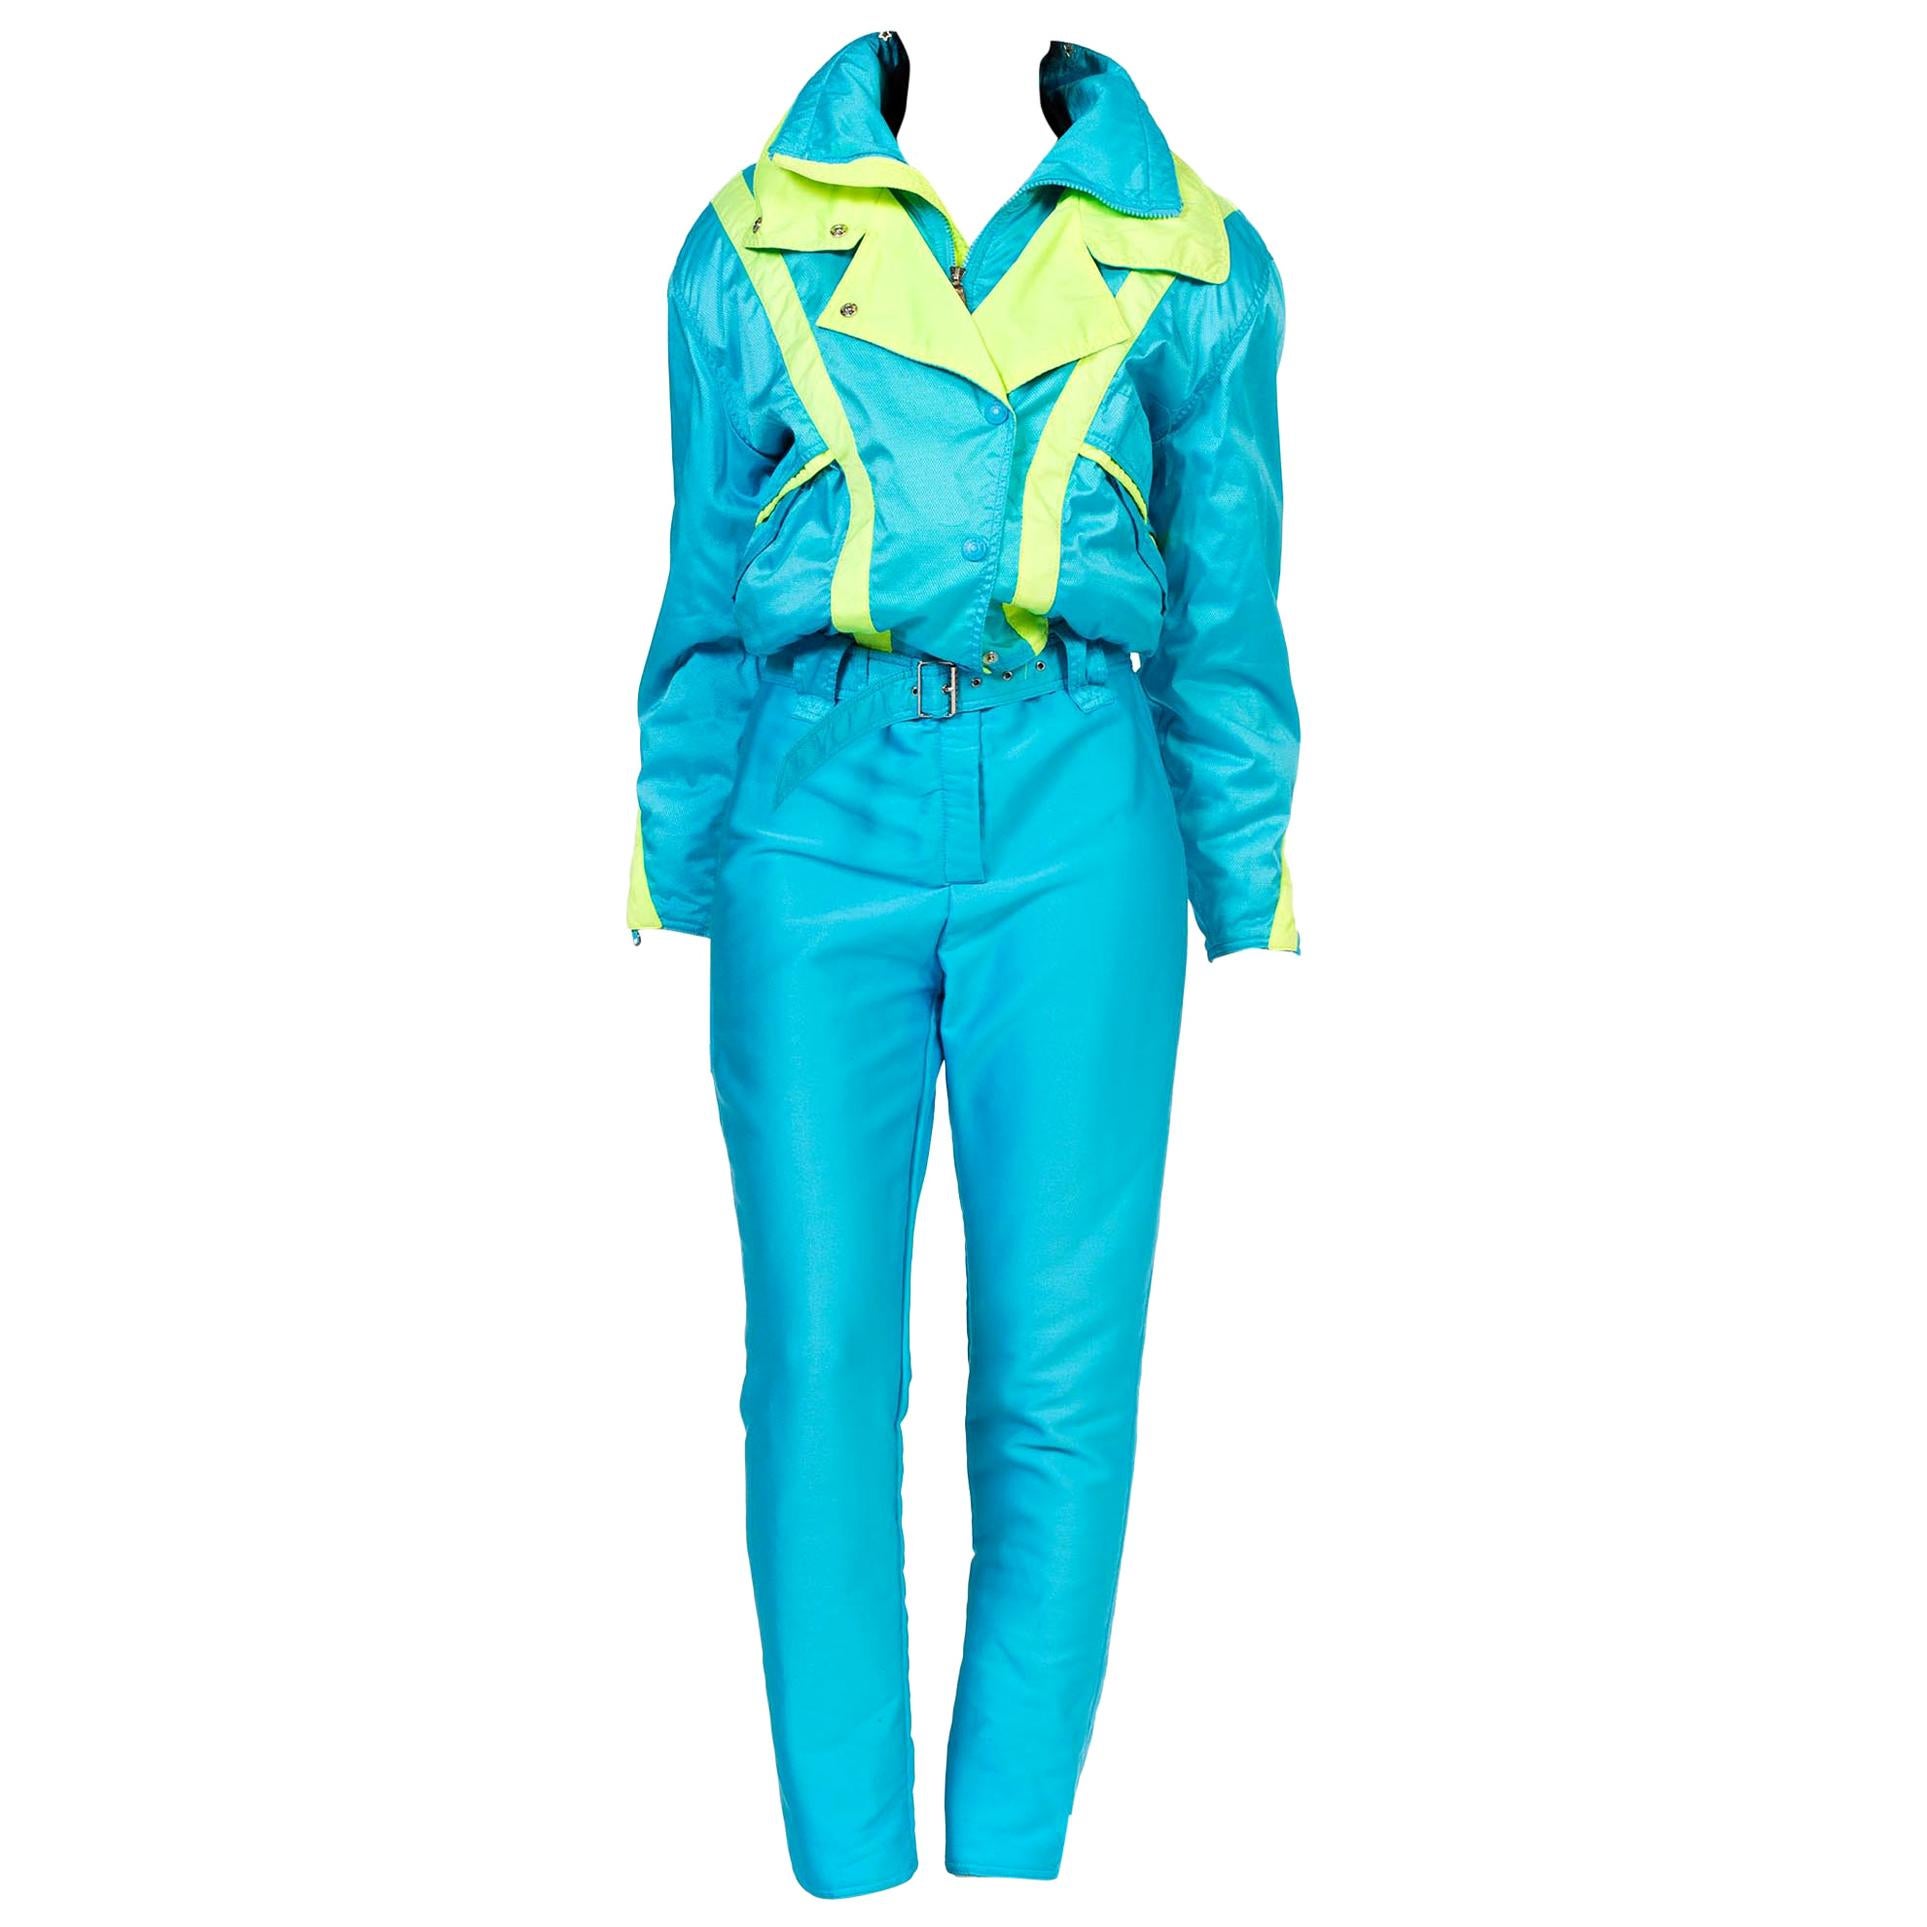 1980 - 1990s Neon Ski Suit with Shoulder Pads